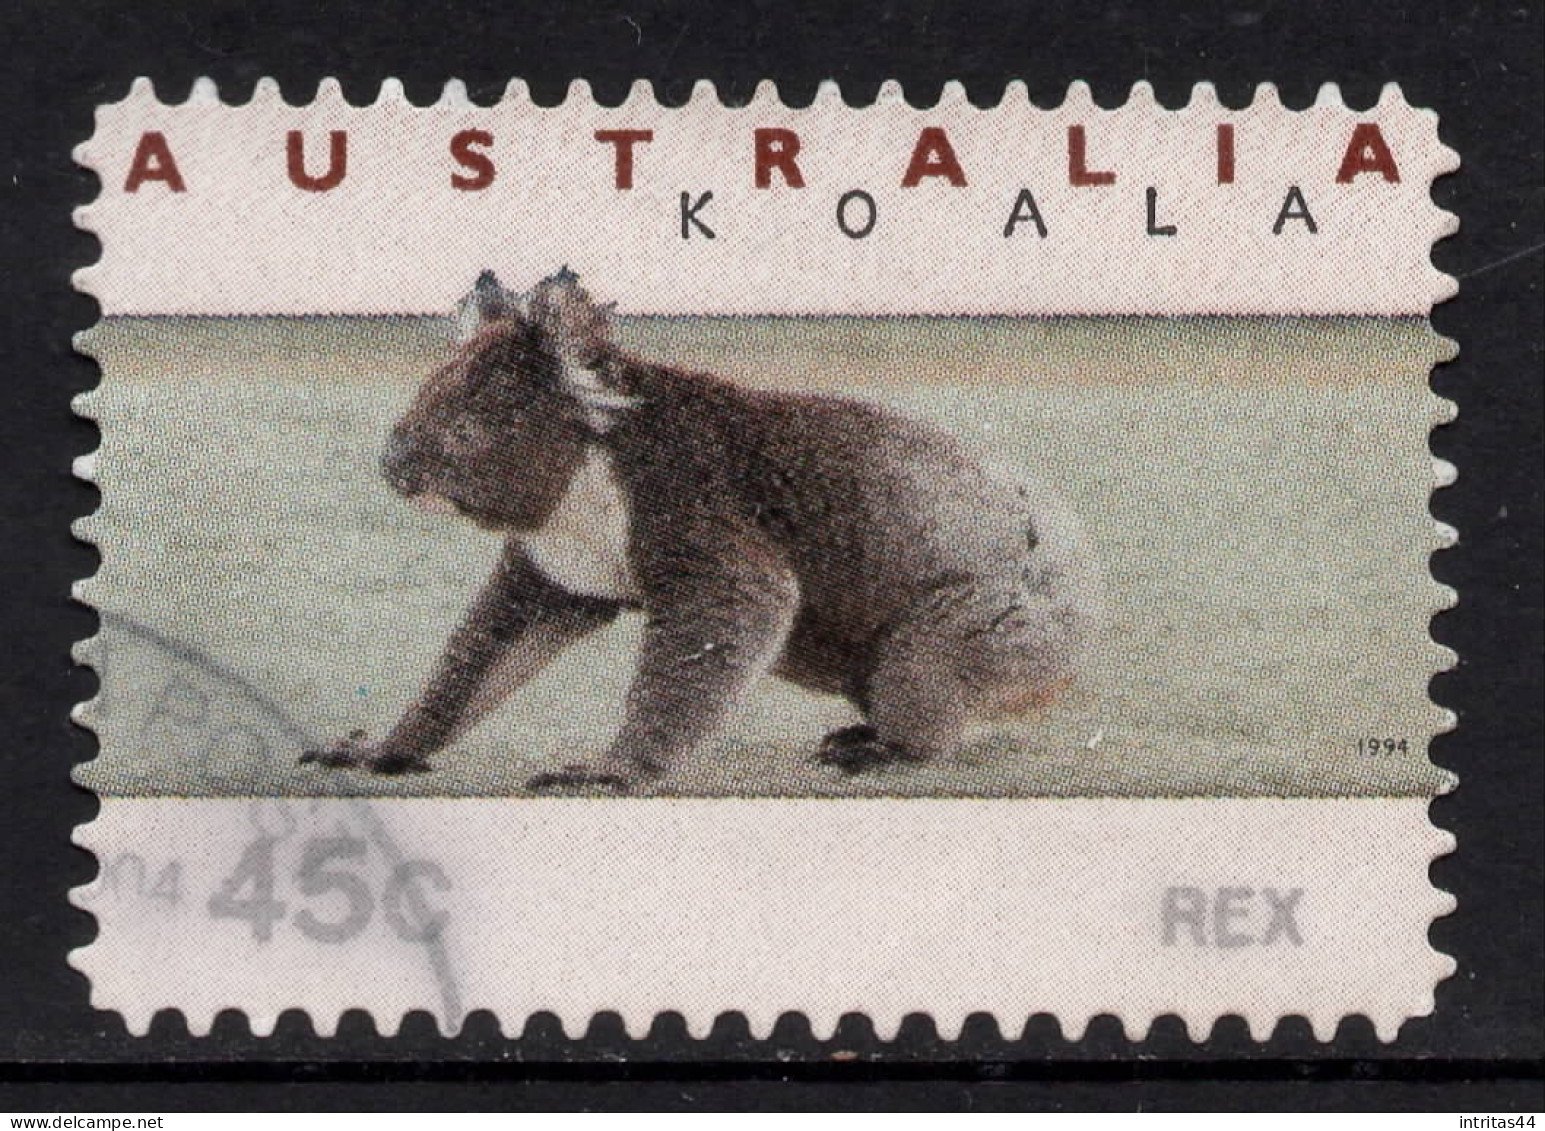 AUSTRALIA 1994 KOALA AND KANGAROO (COUNTER PRINTED) "45c KOALA ON GROUND" STAMP VFU - Used Stamps